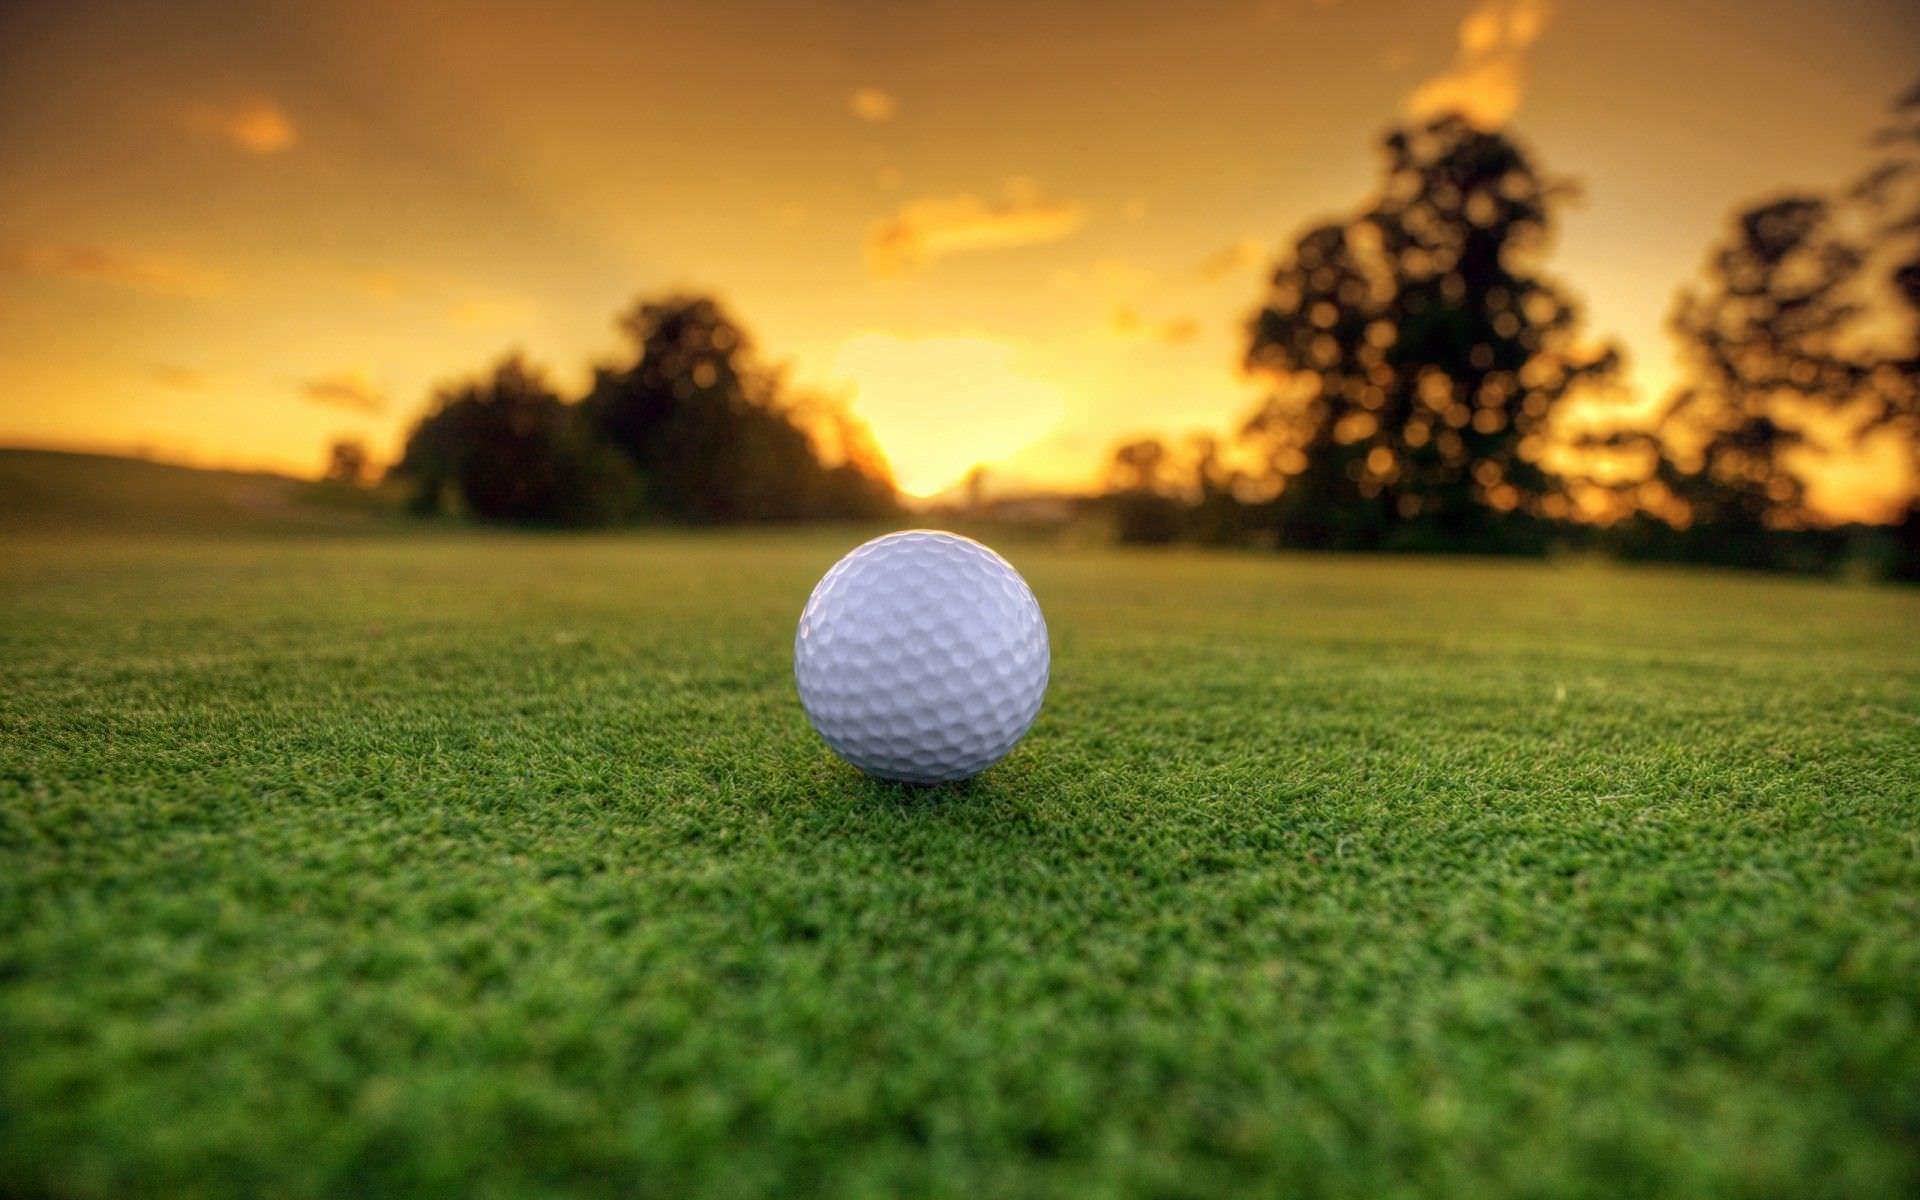 Golf Wallpaper, Background, Image. Design Trends PSD, Vector Downloads